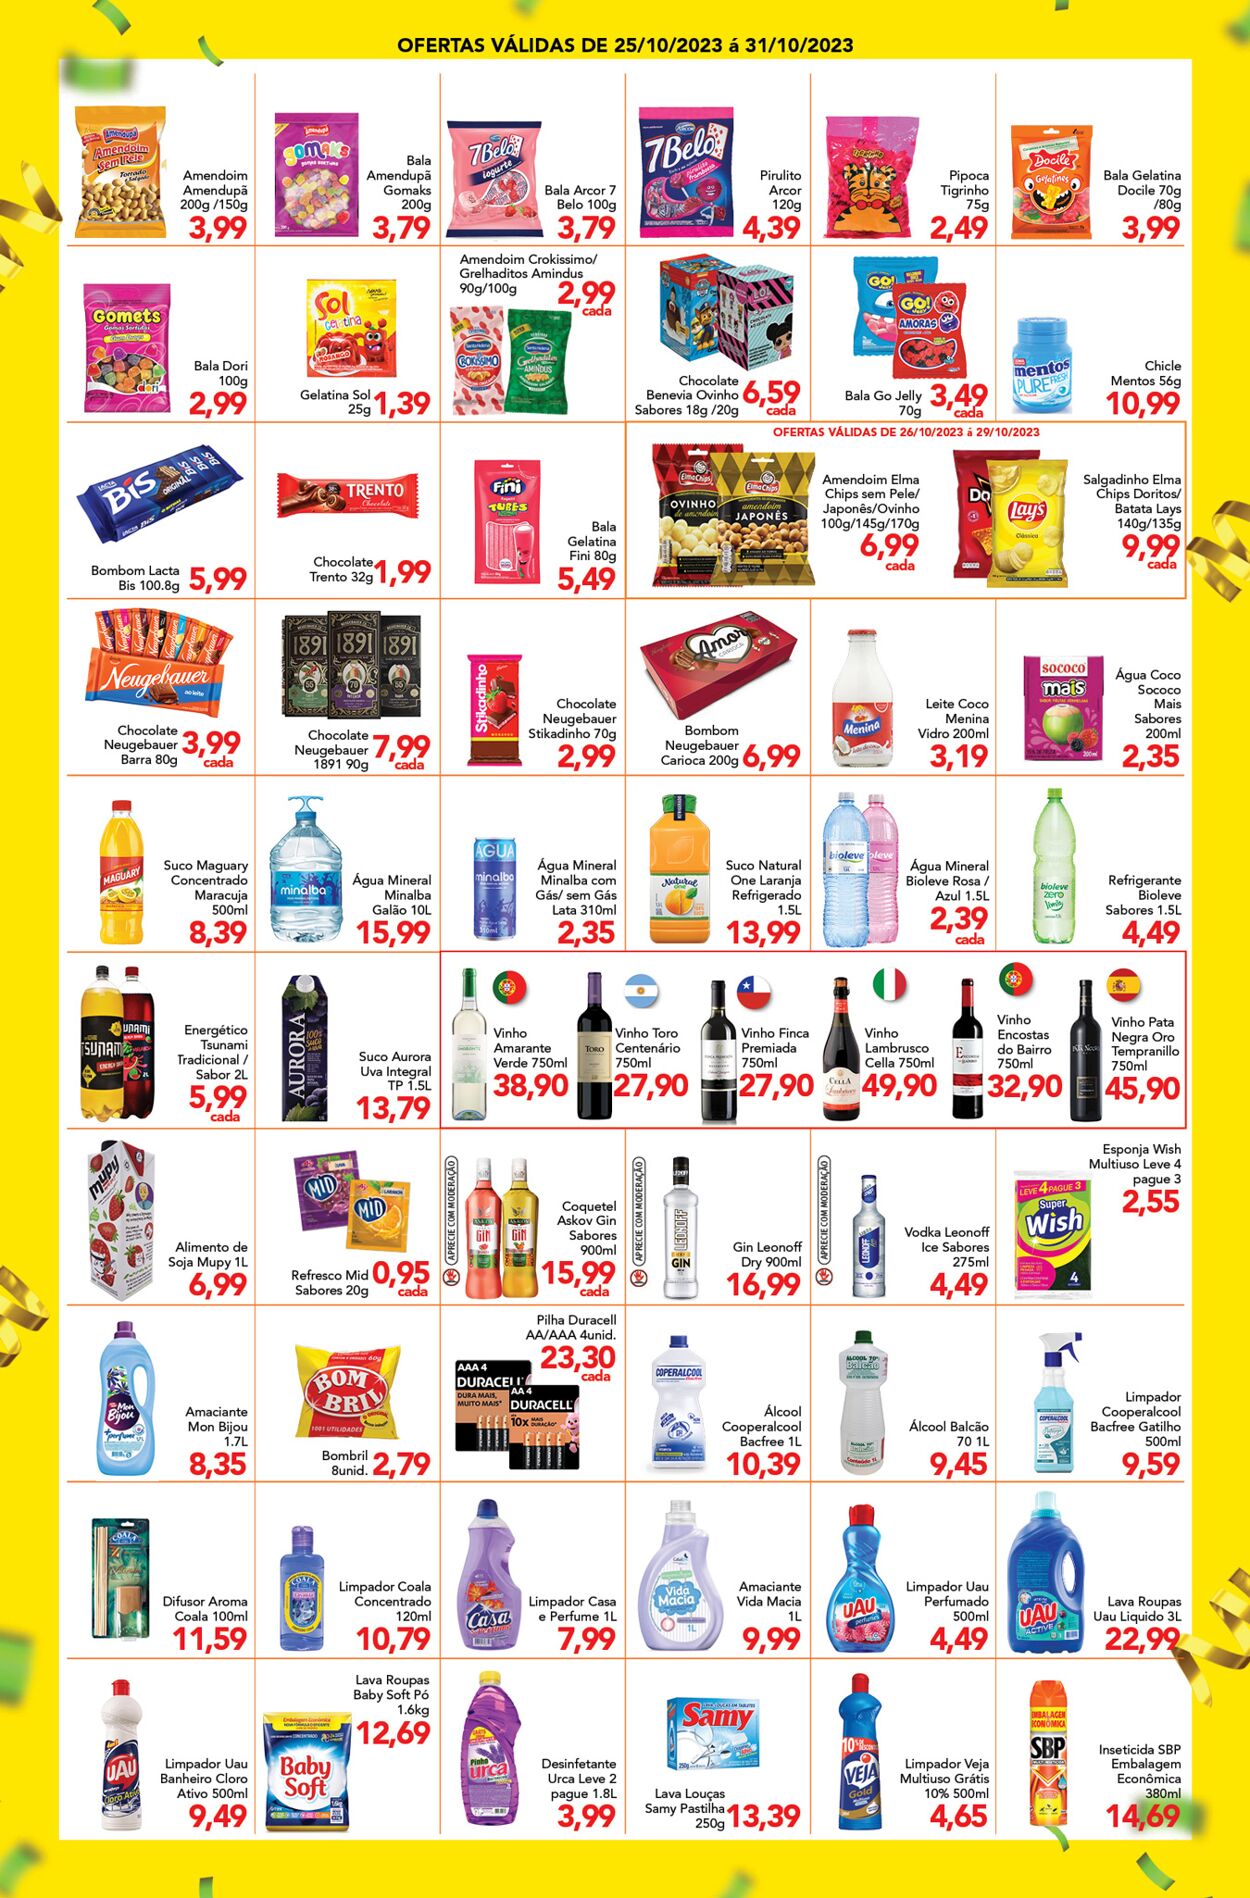 Folheto Supermercados Joanin 26.10.2023 - 31.10.2023